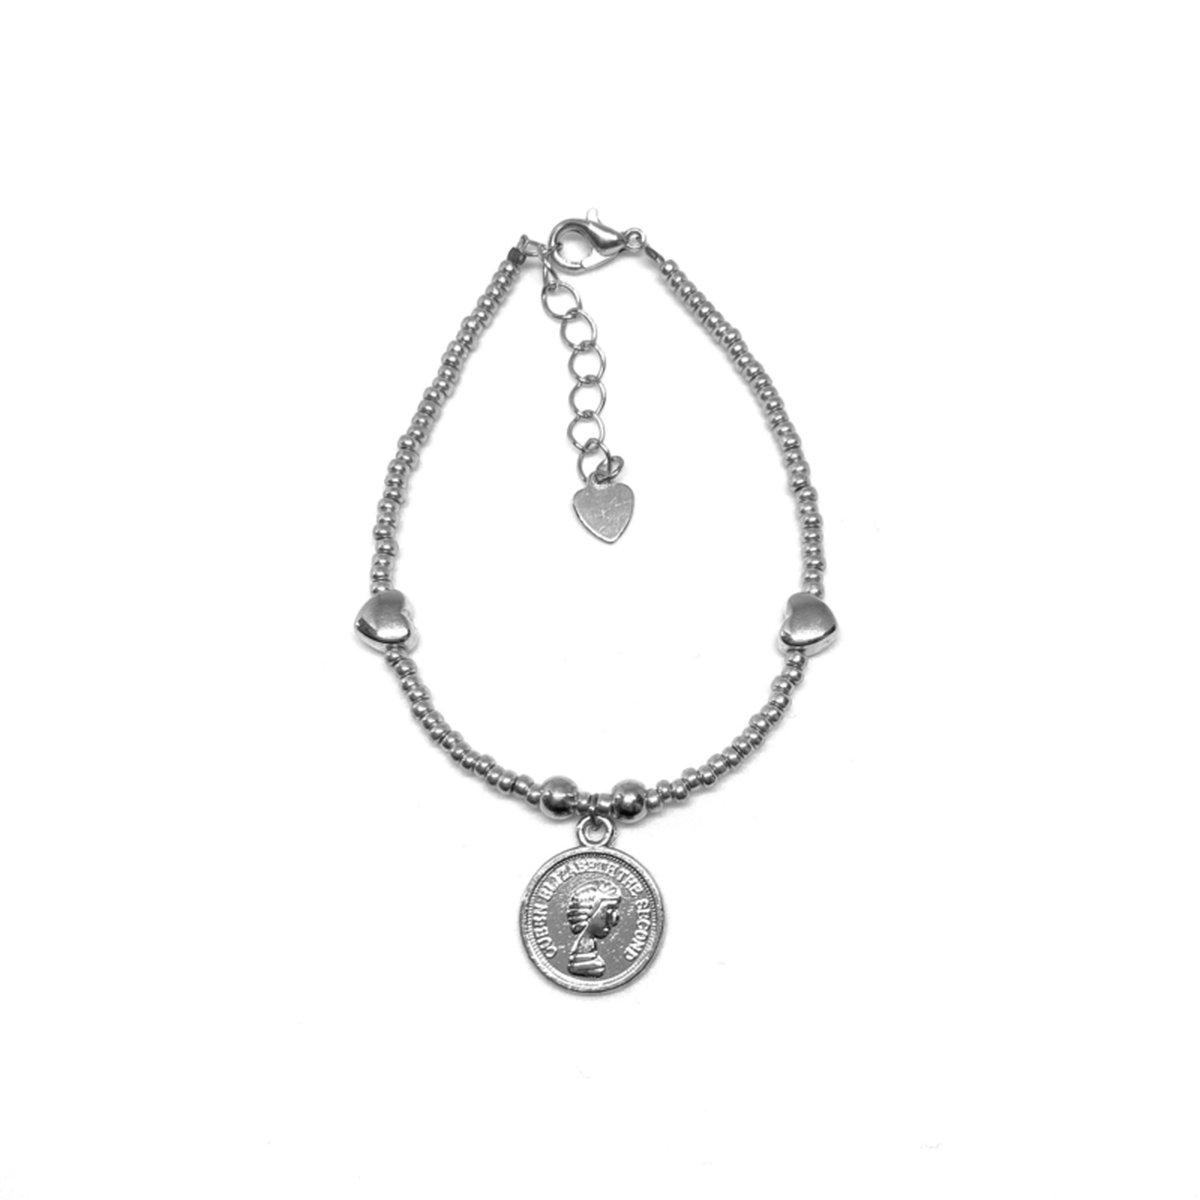 Bracelet with an Elizabeth coin - silver